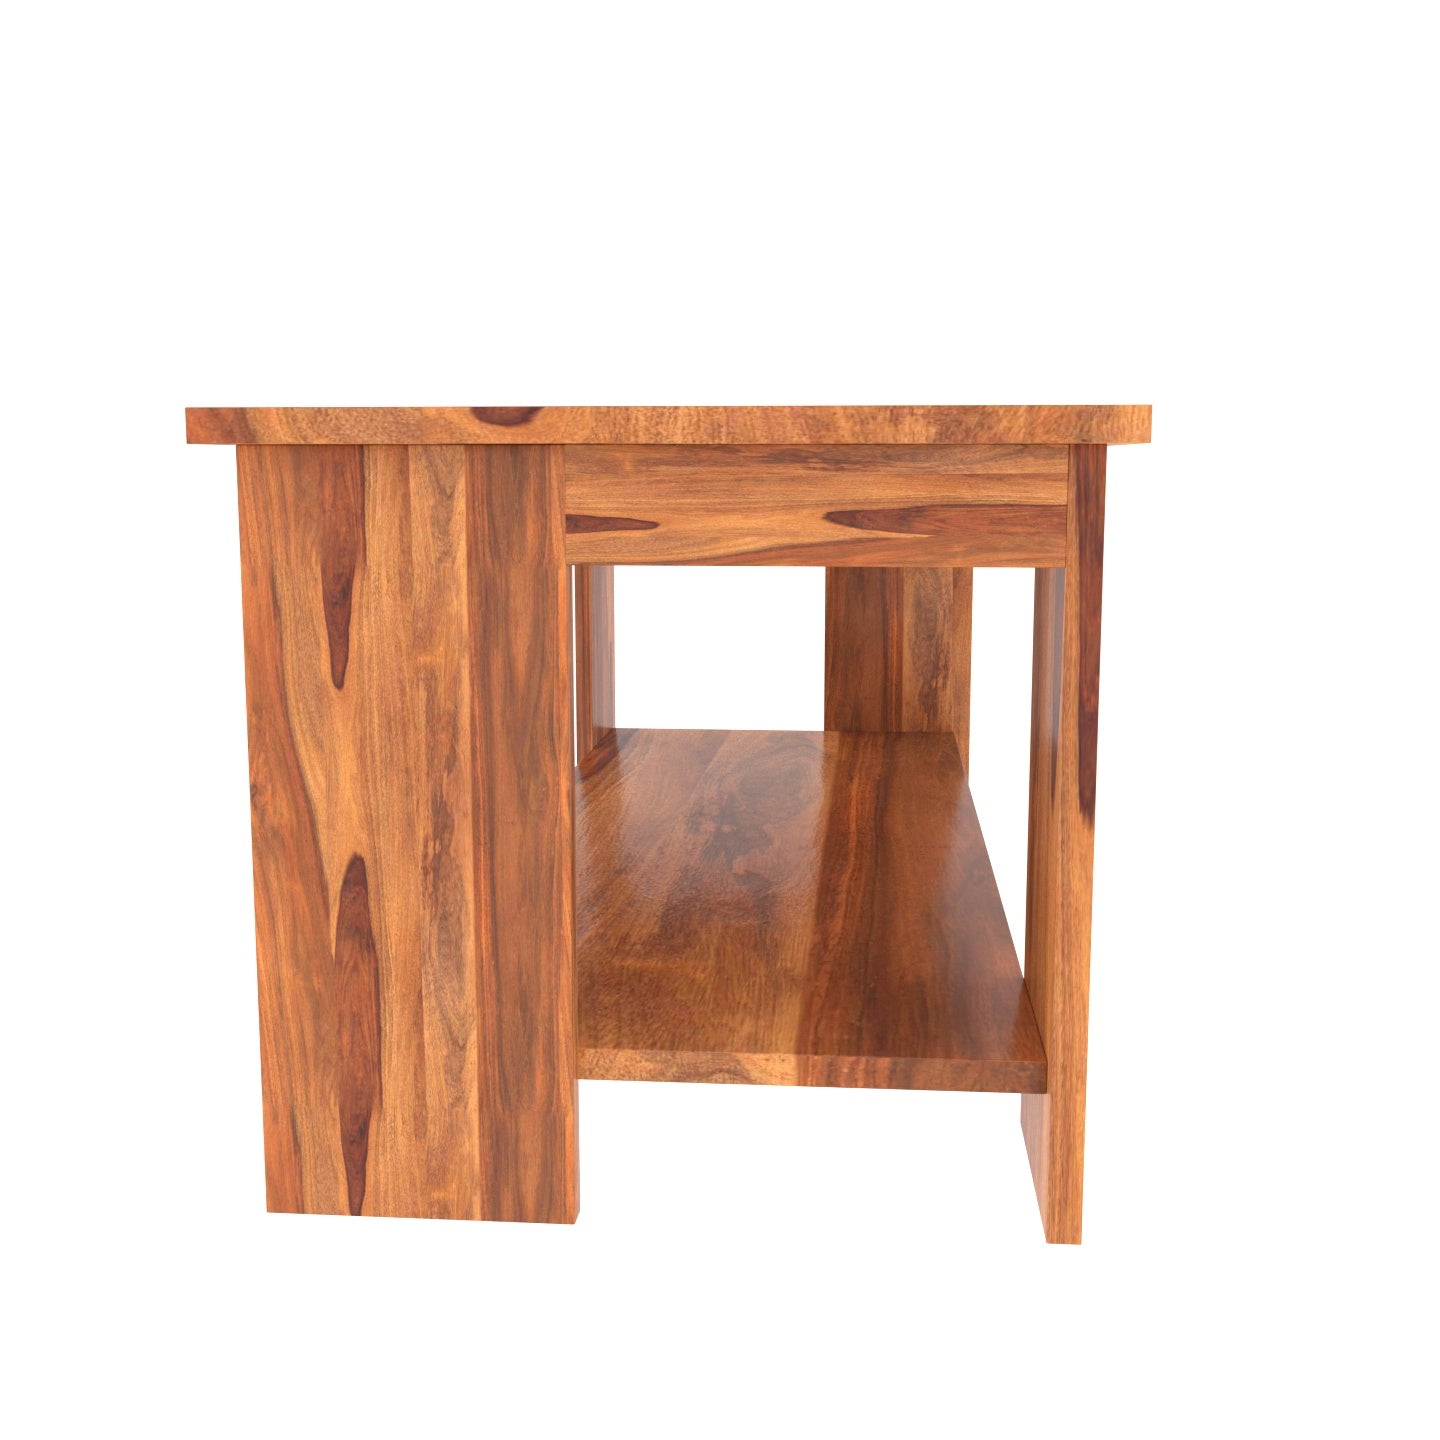 Simple Storage Sheesham Handmade Wooden Coffee Table Coffee Table